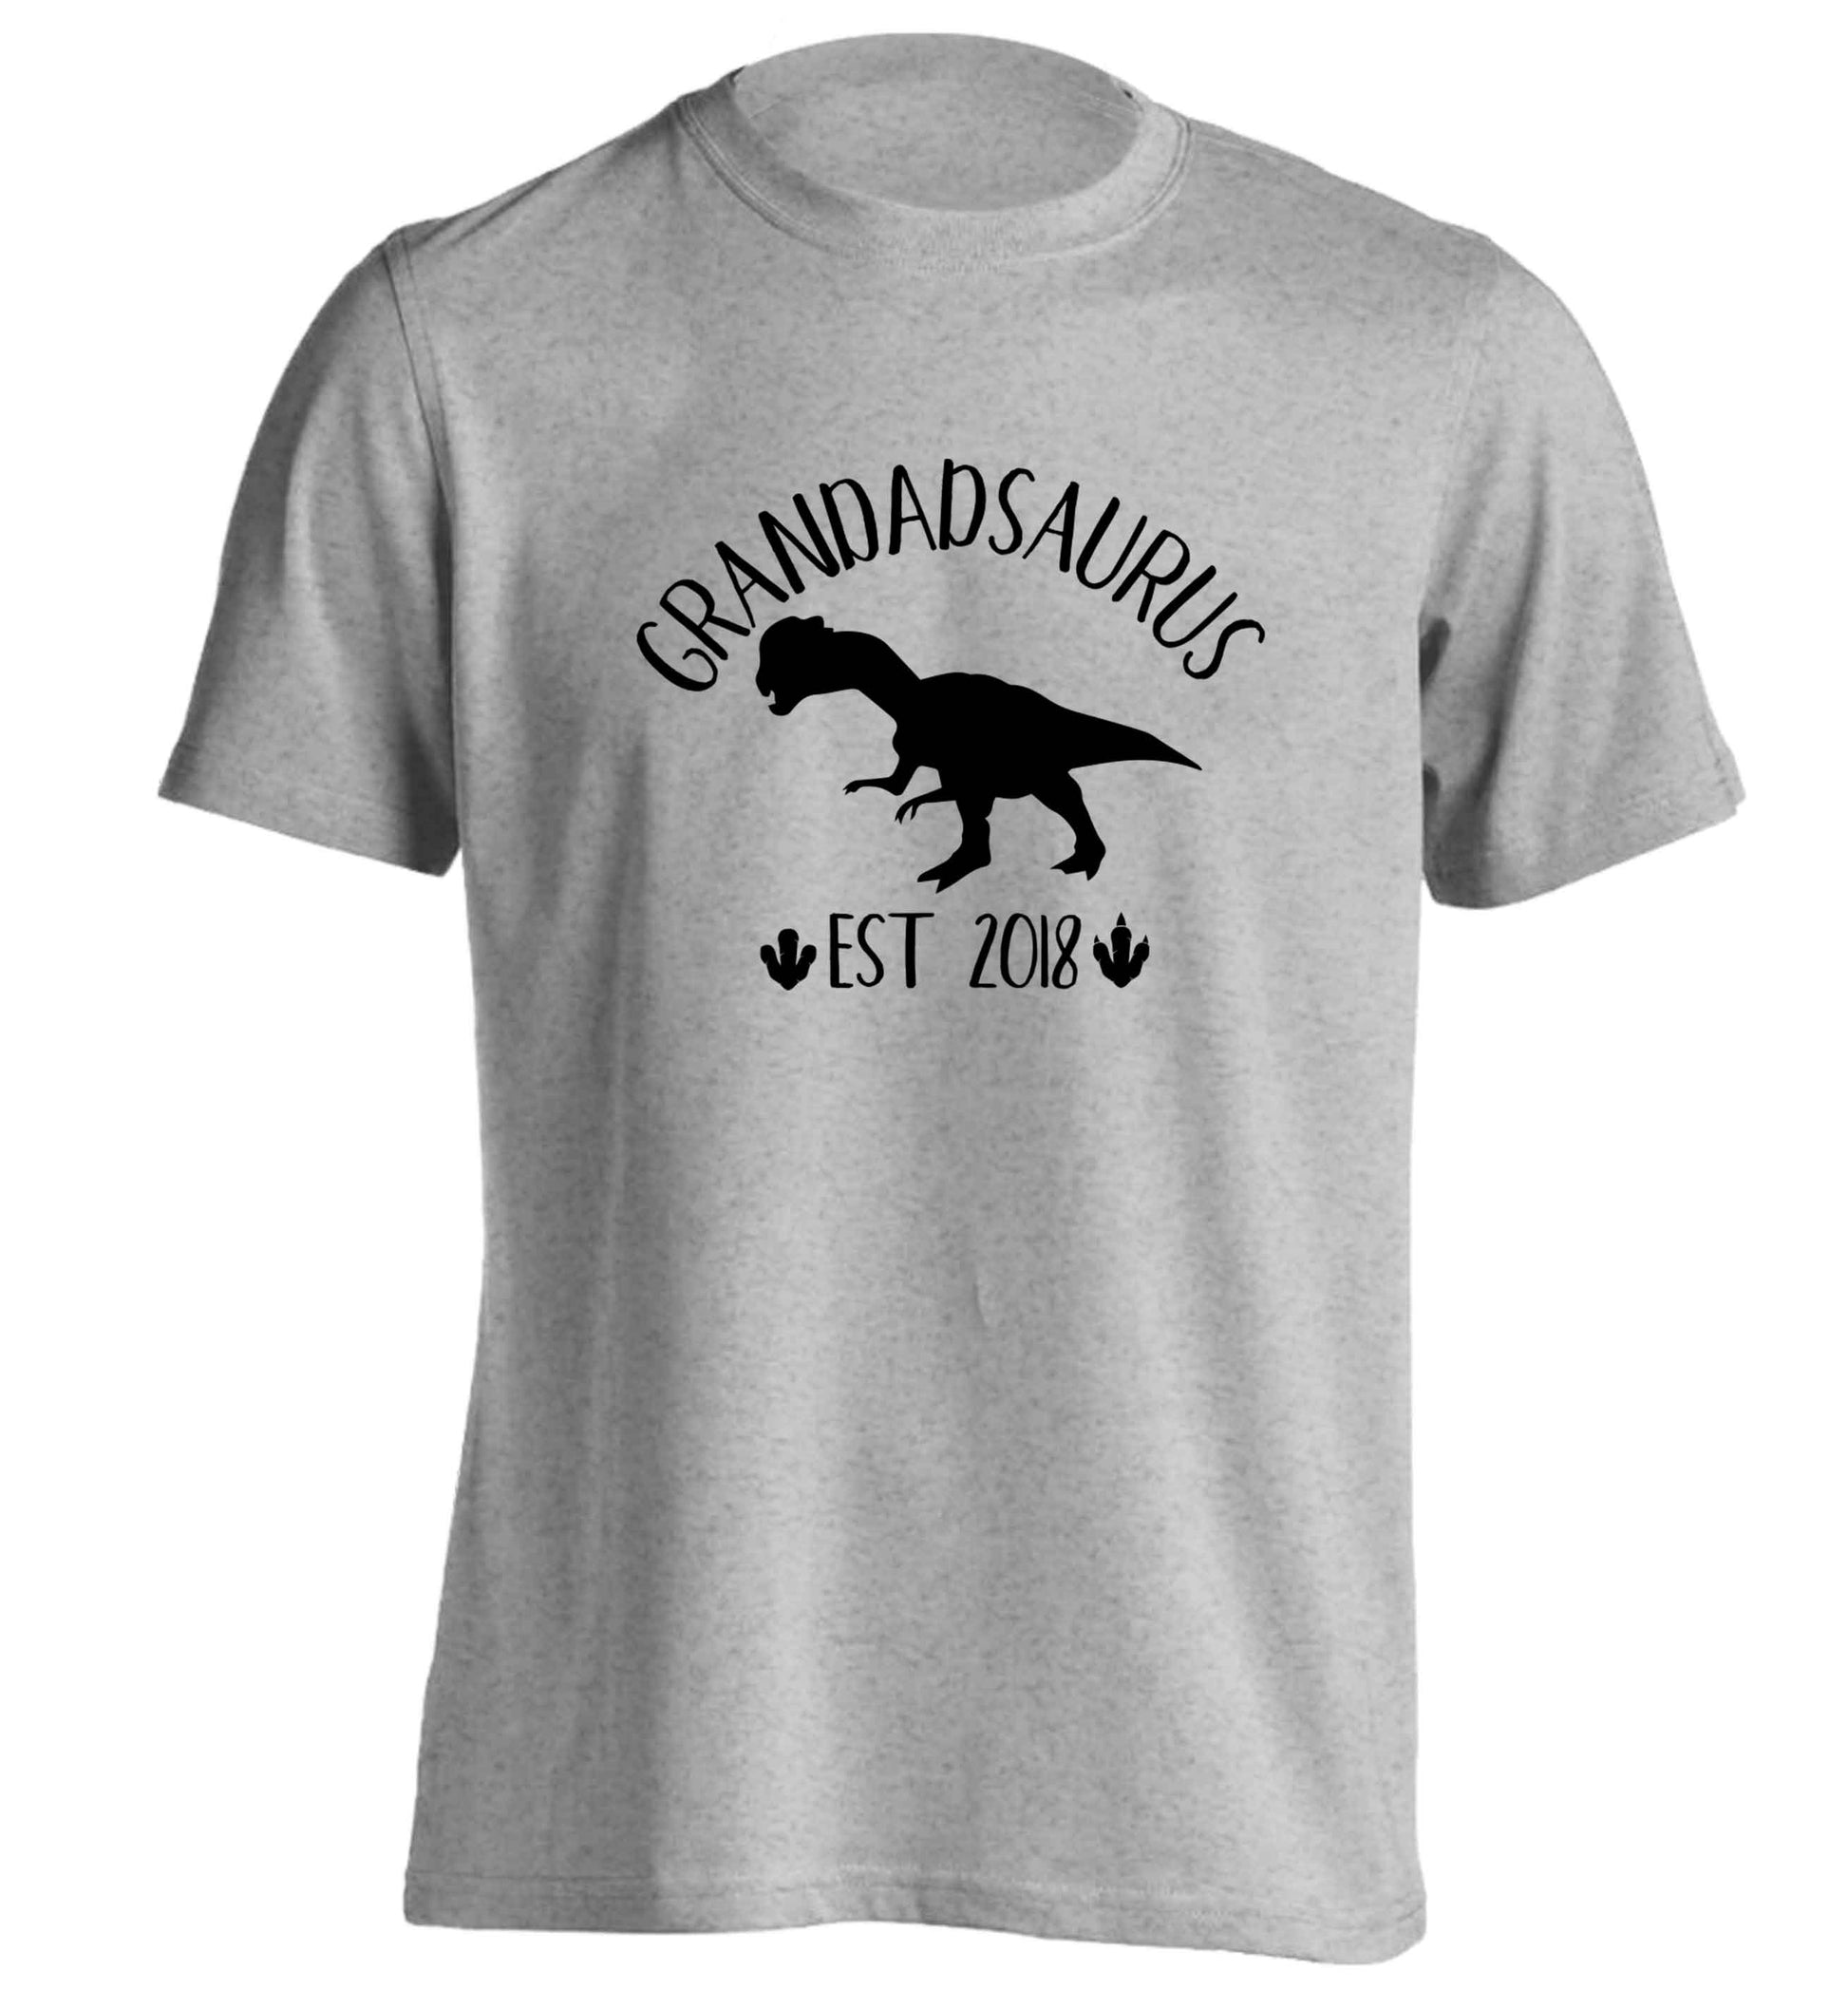 Personalised grandadsaurus since (custom date) adults unisex grey Tshirt 2XL